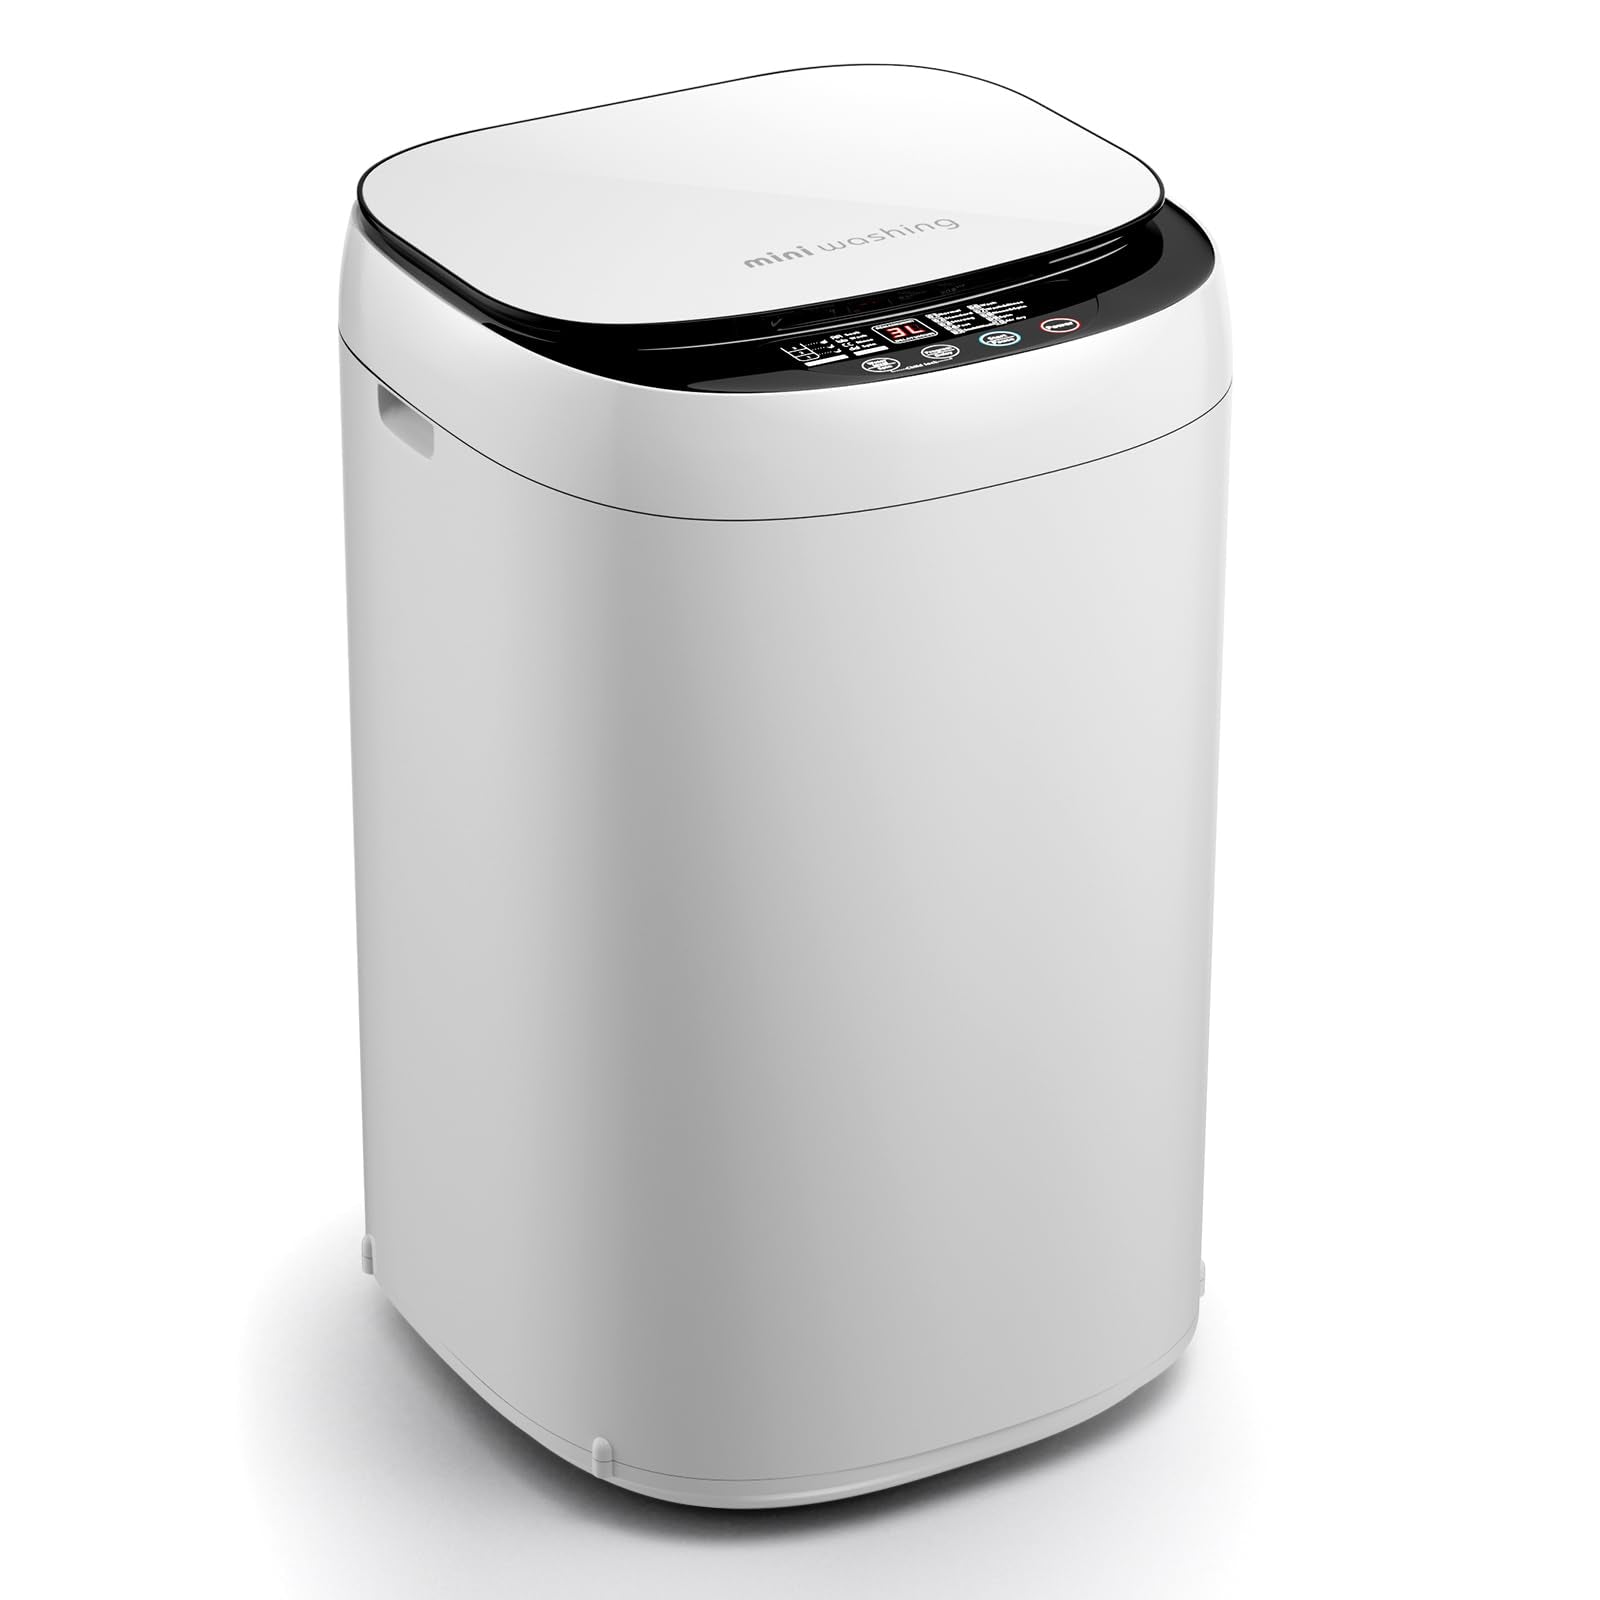 Giantex Portable Washing Machine